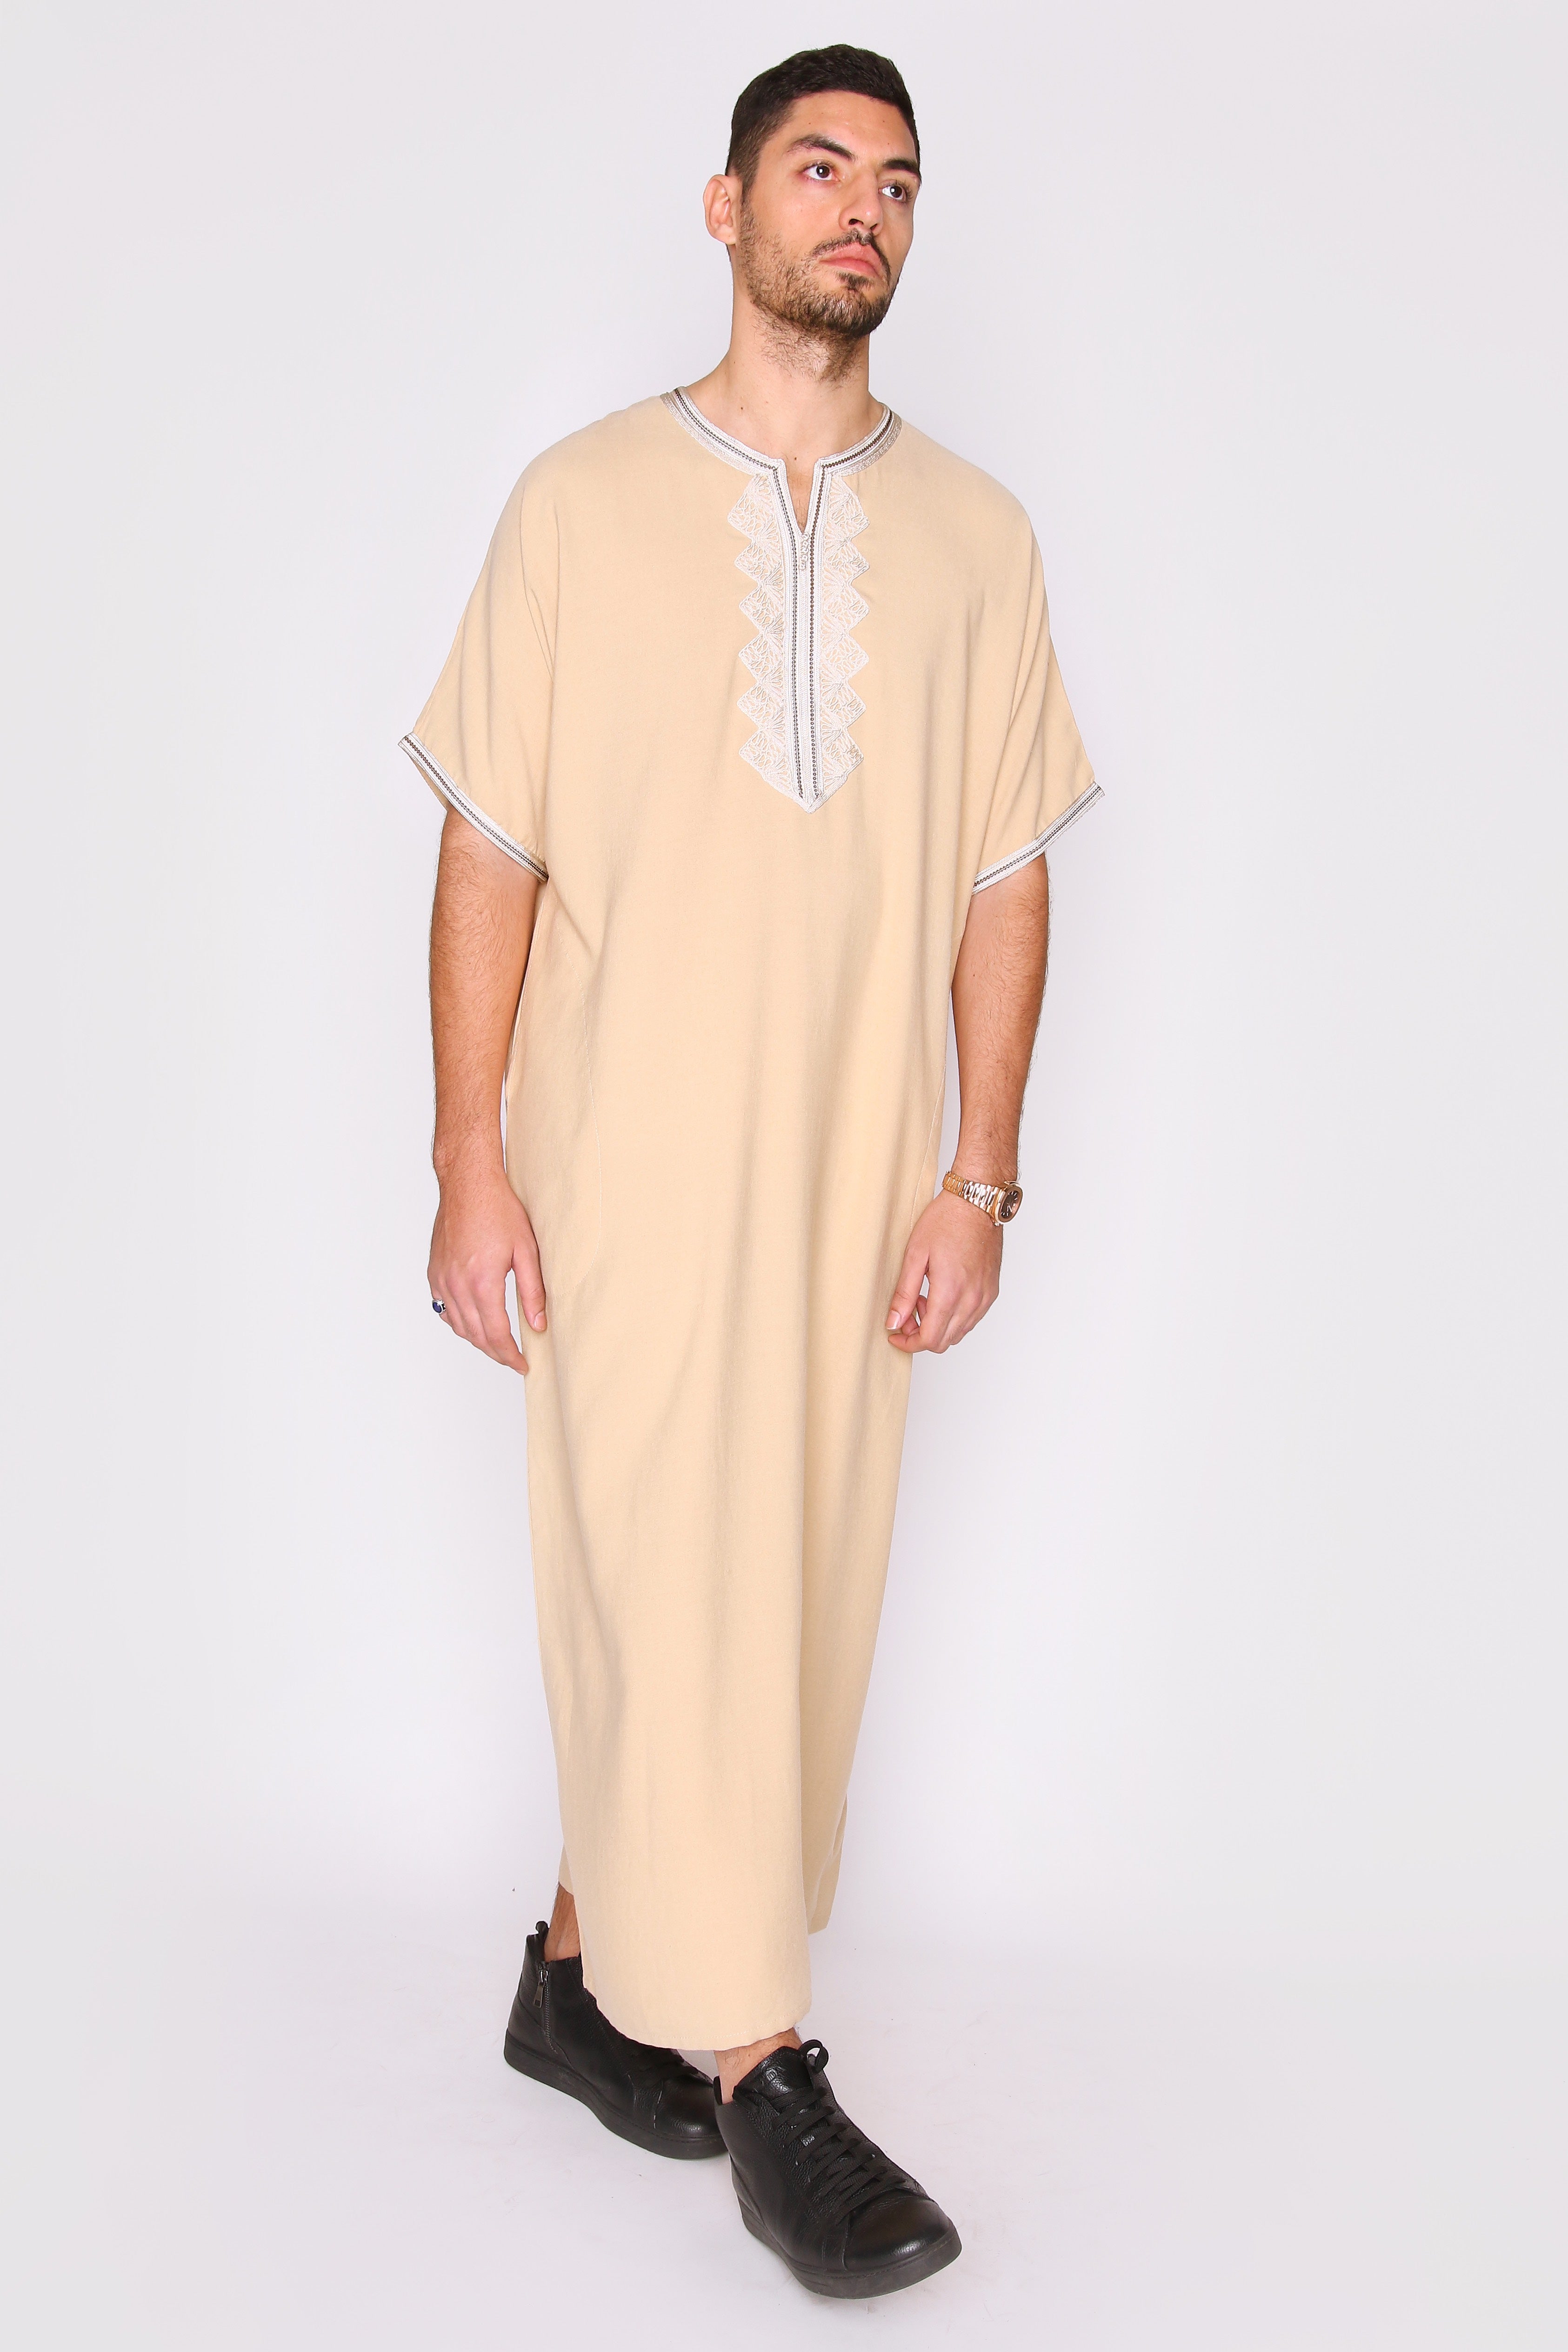 Gandoura Hassan Men's Short Sleeve Full-length Embroidered Robe Casual Thobe in Beige